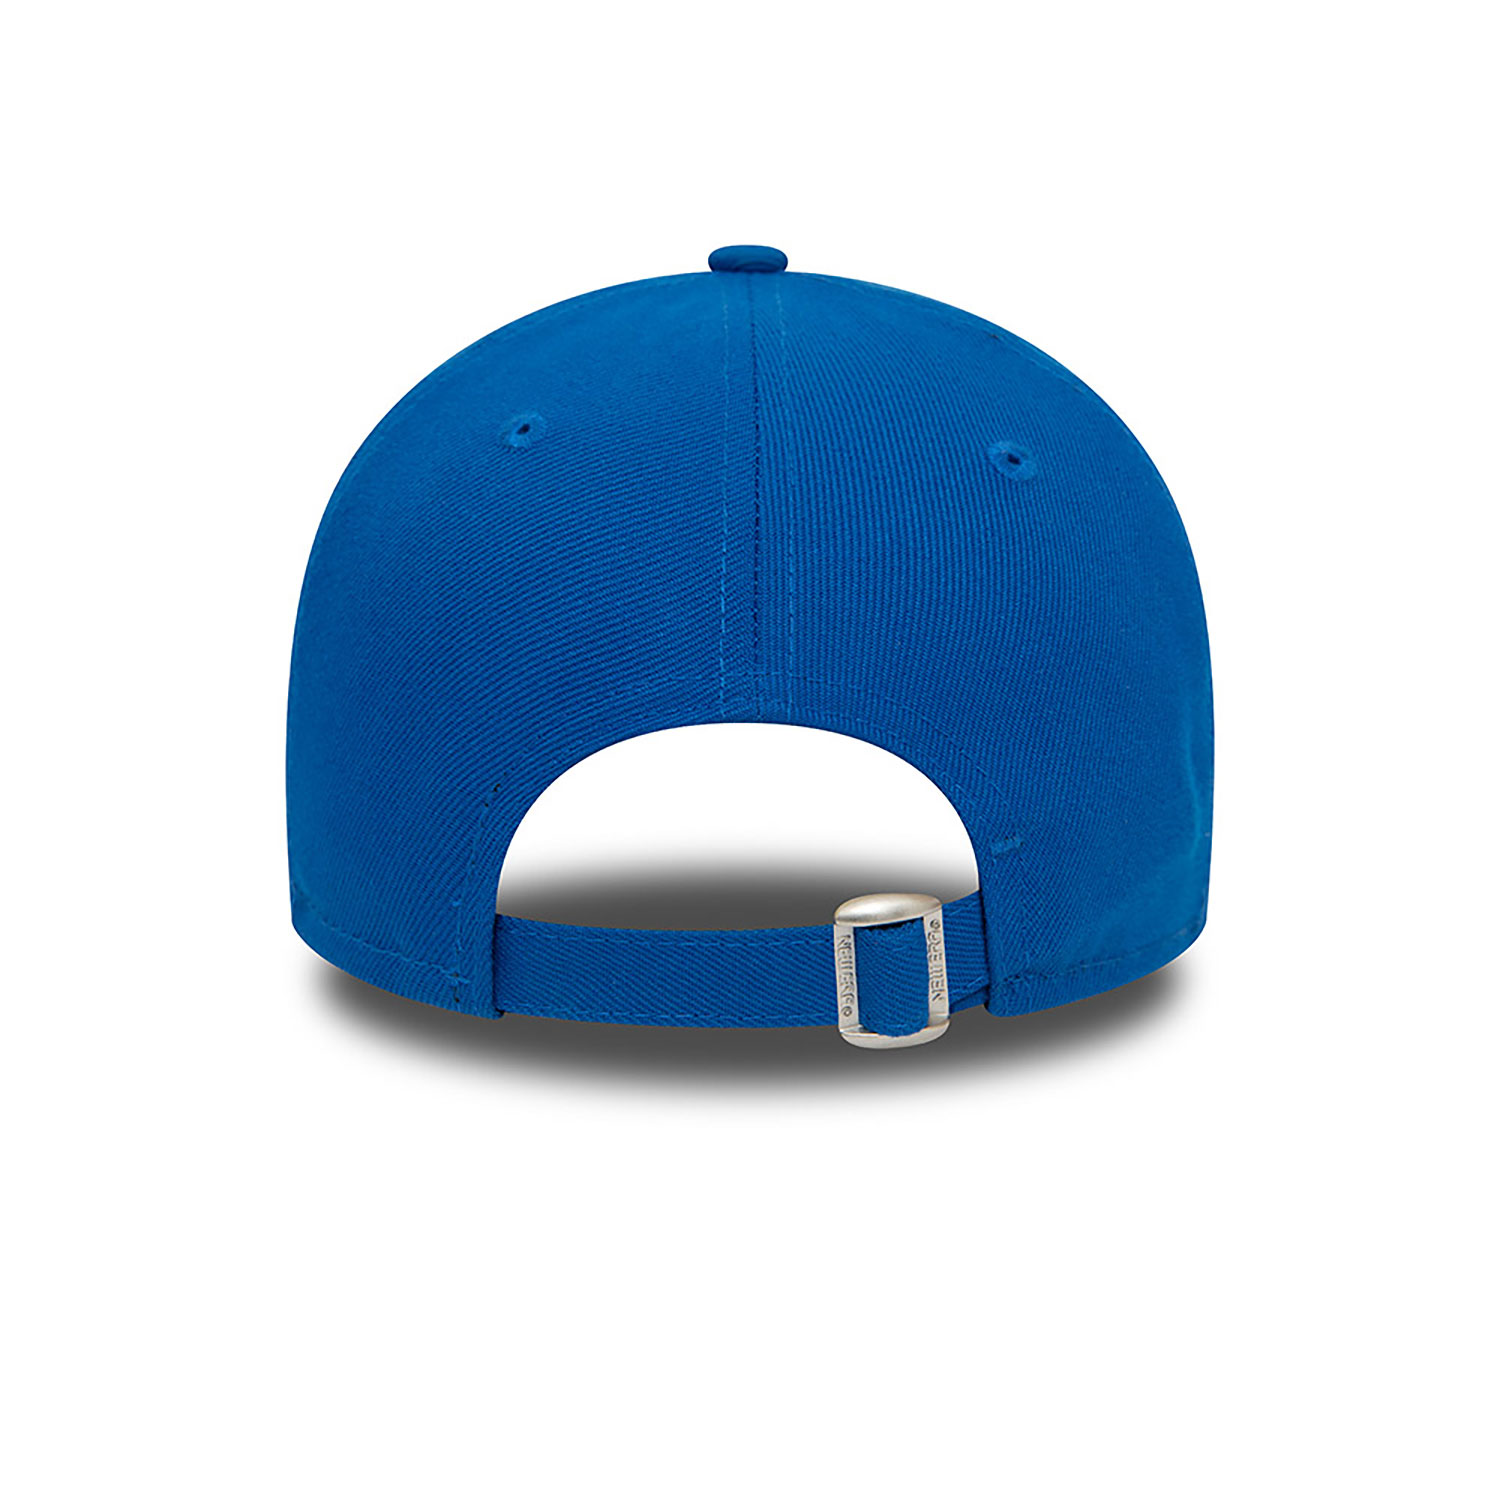 New York Yankees MLB Repreve Blue 9FORTY Adjustable Cap